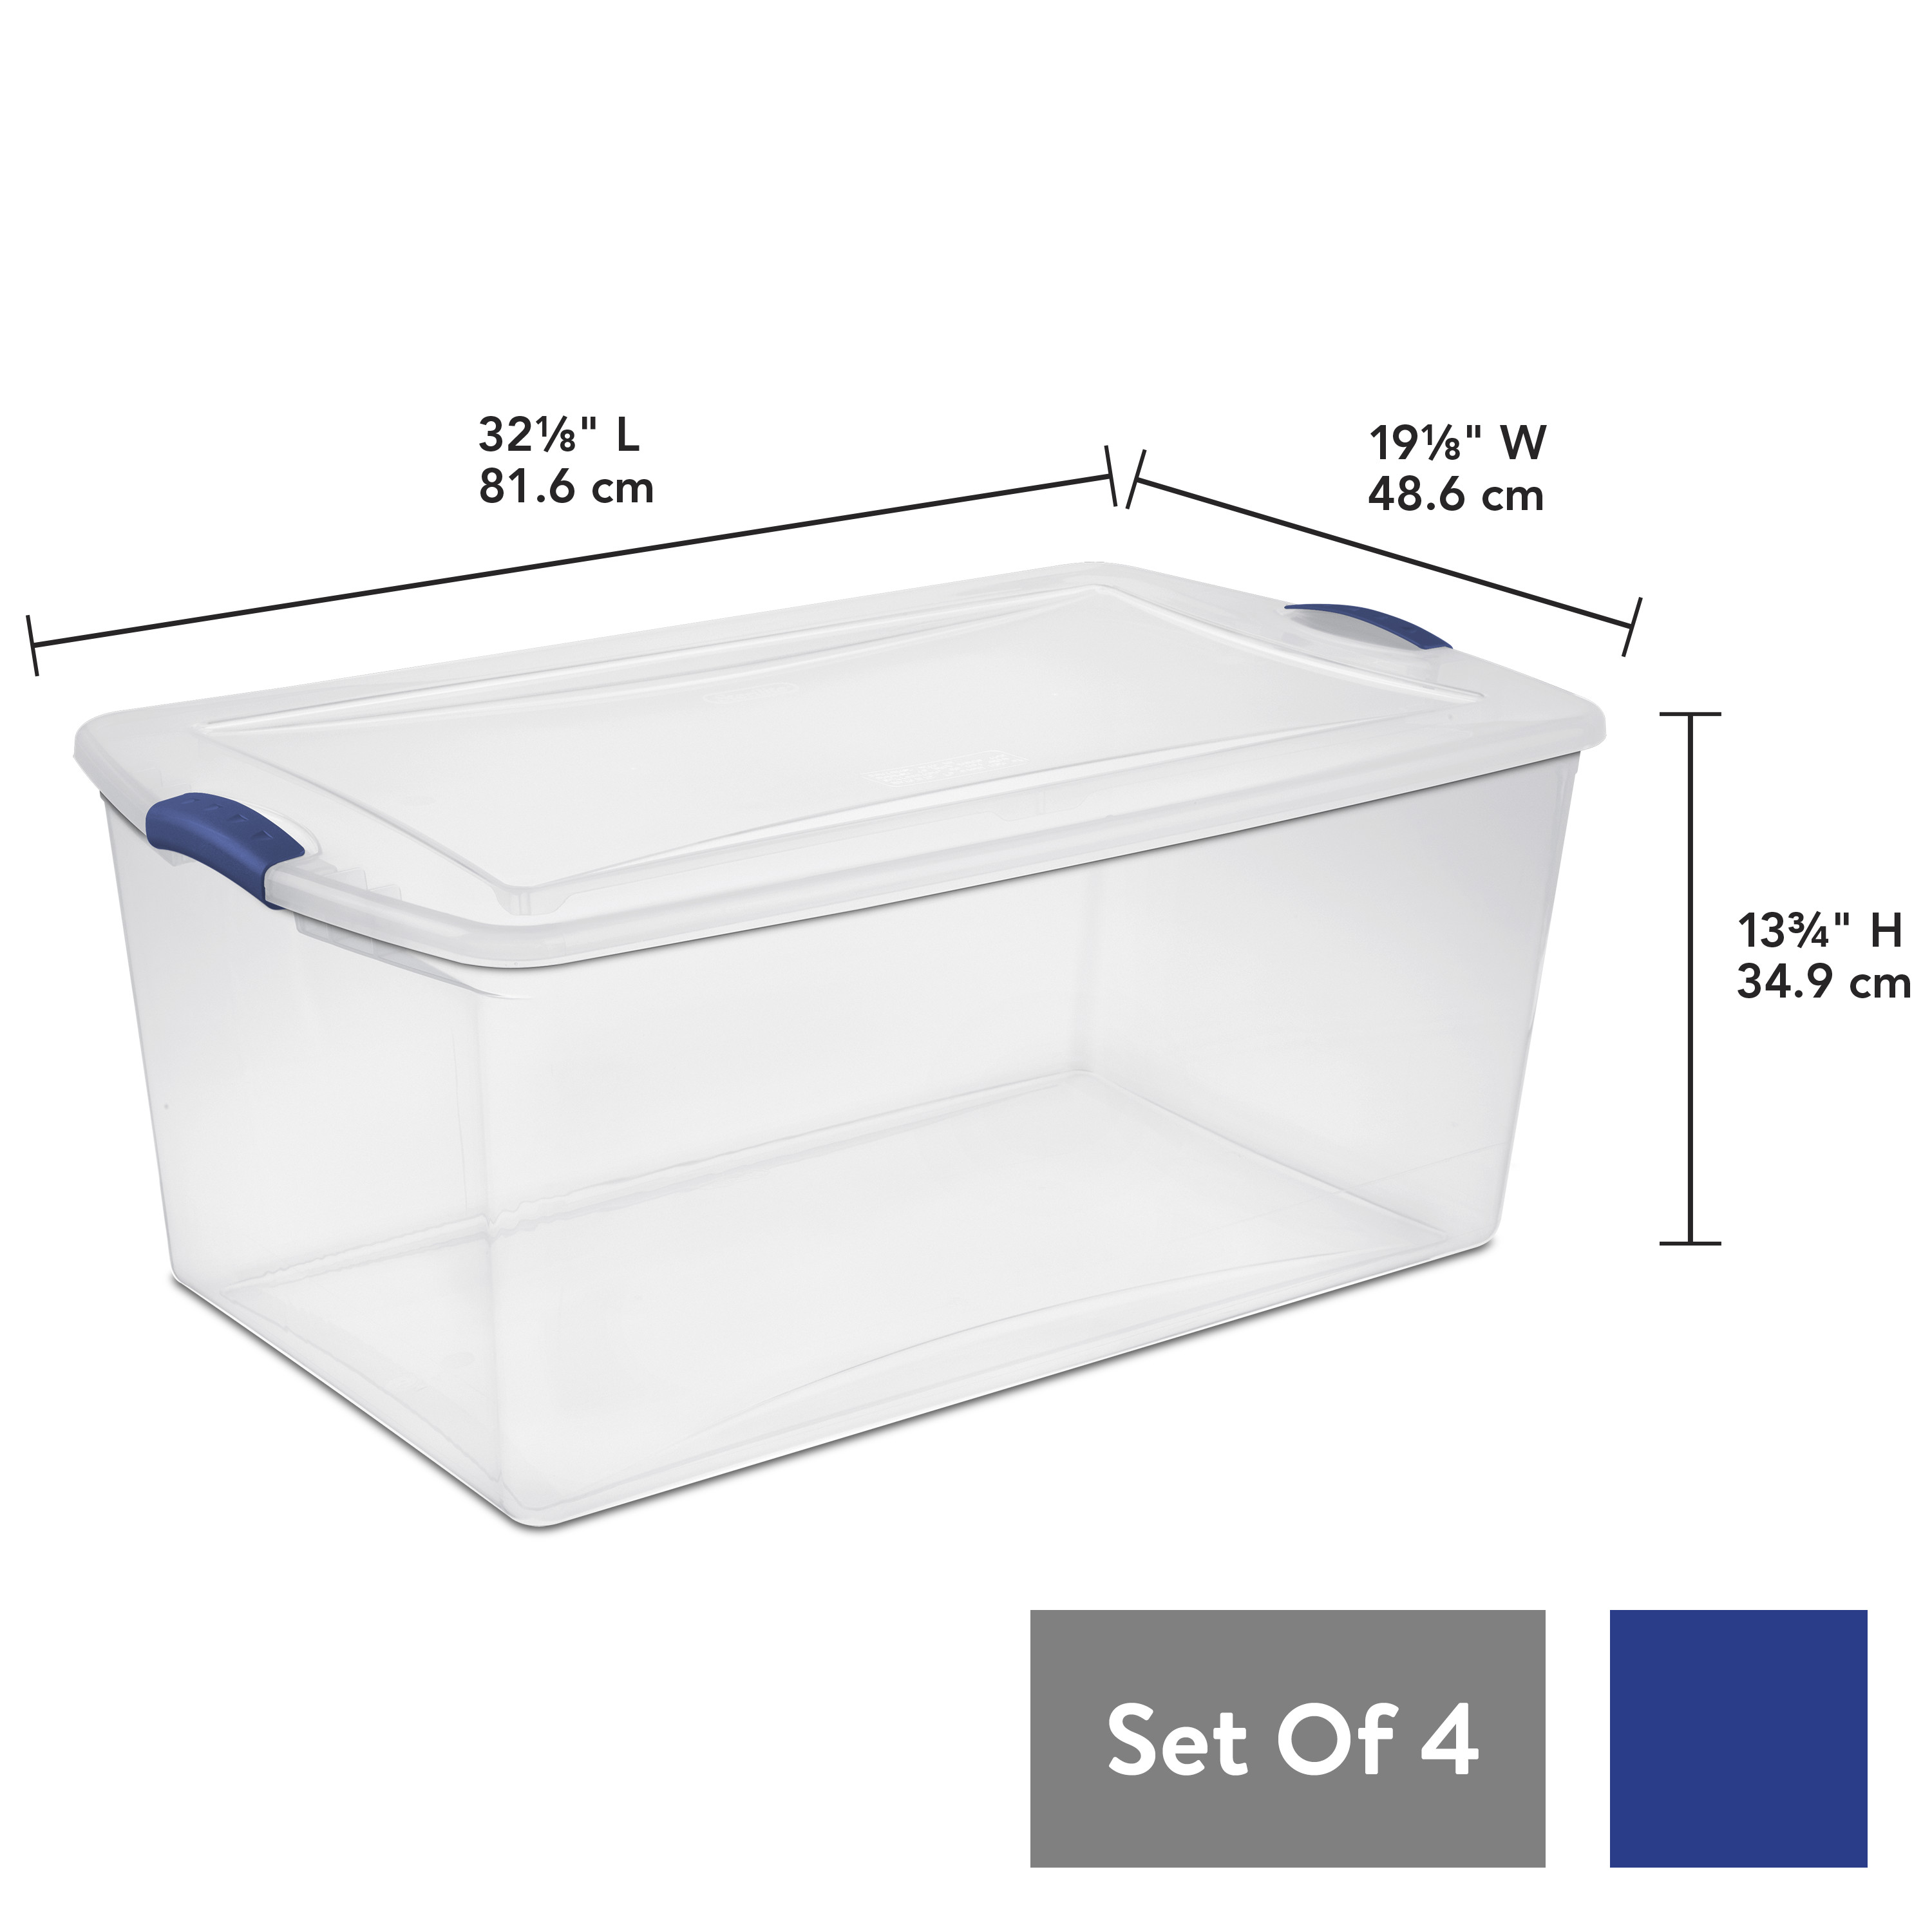 Sterilite 105 Qt. Latch Box Plastic, Stadium Blue, Set of 4 - image 4 of 9